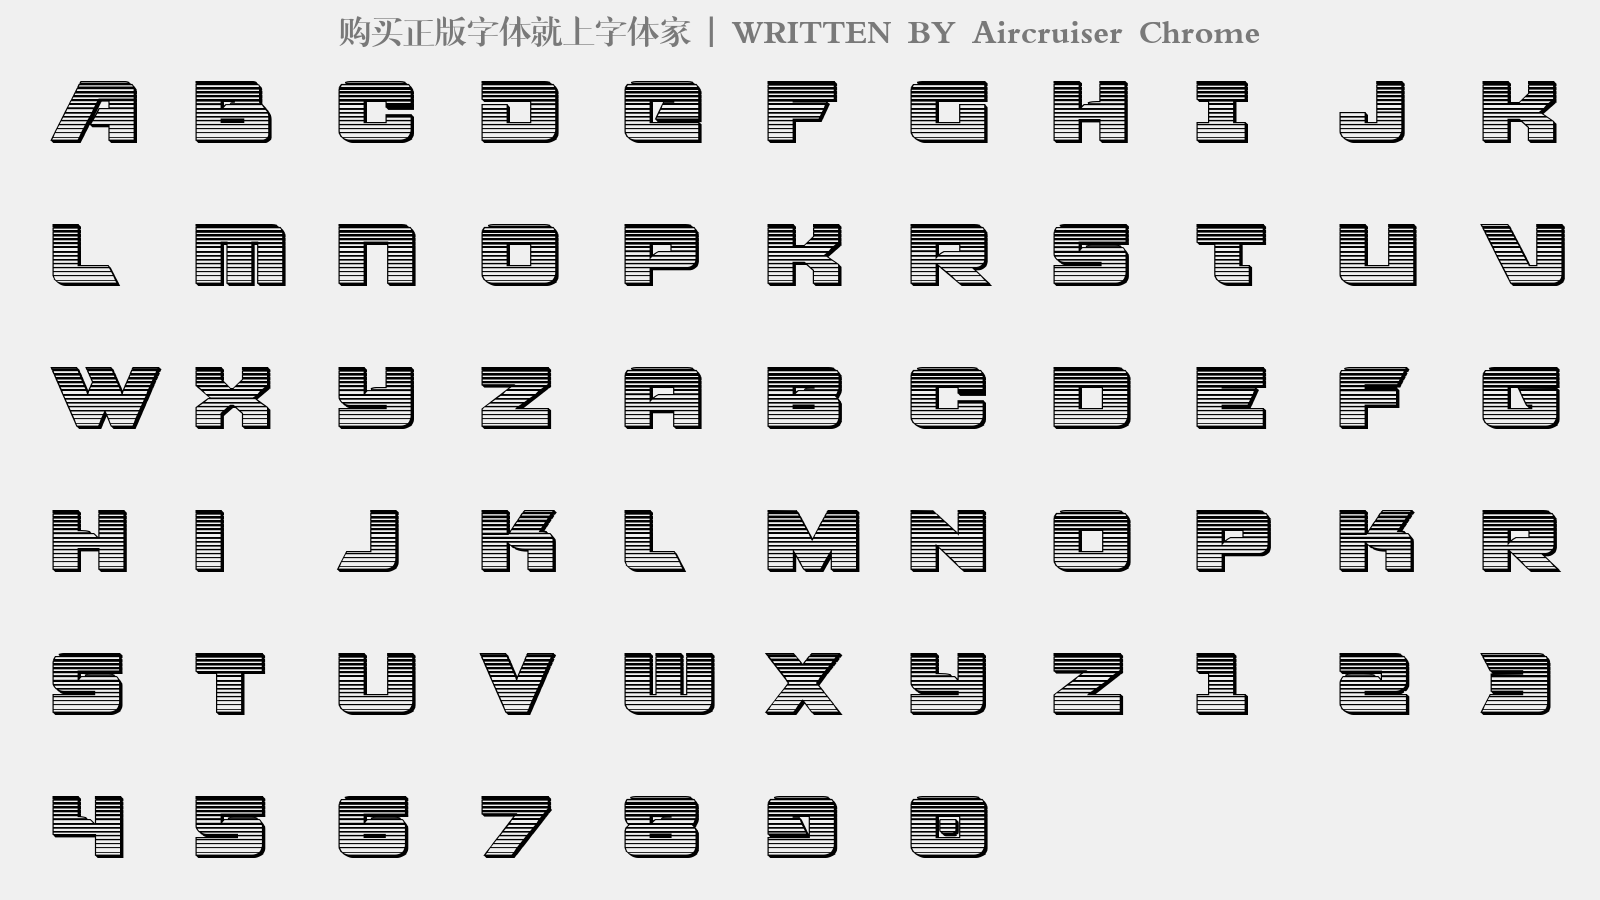 Aircruiser Chrome - 大写字母/小写字母/数字